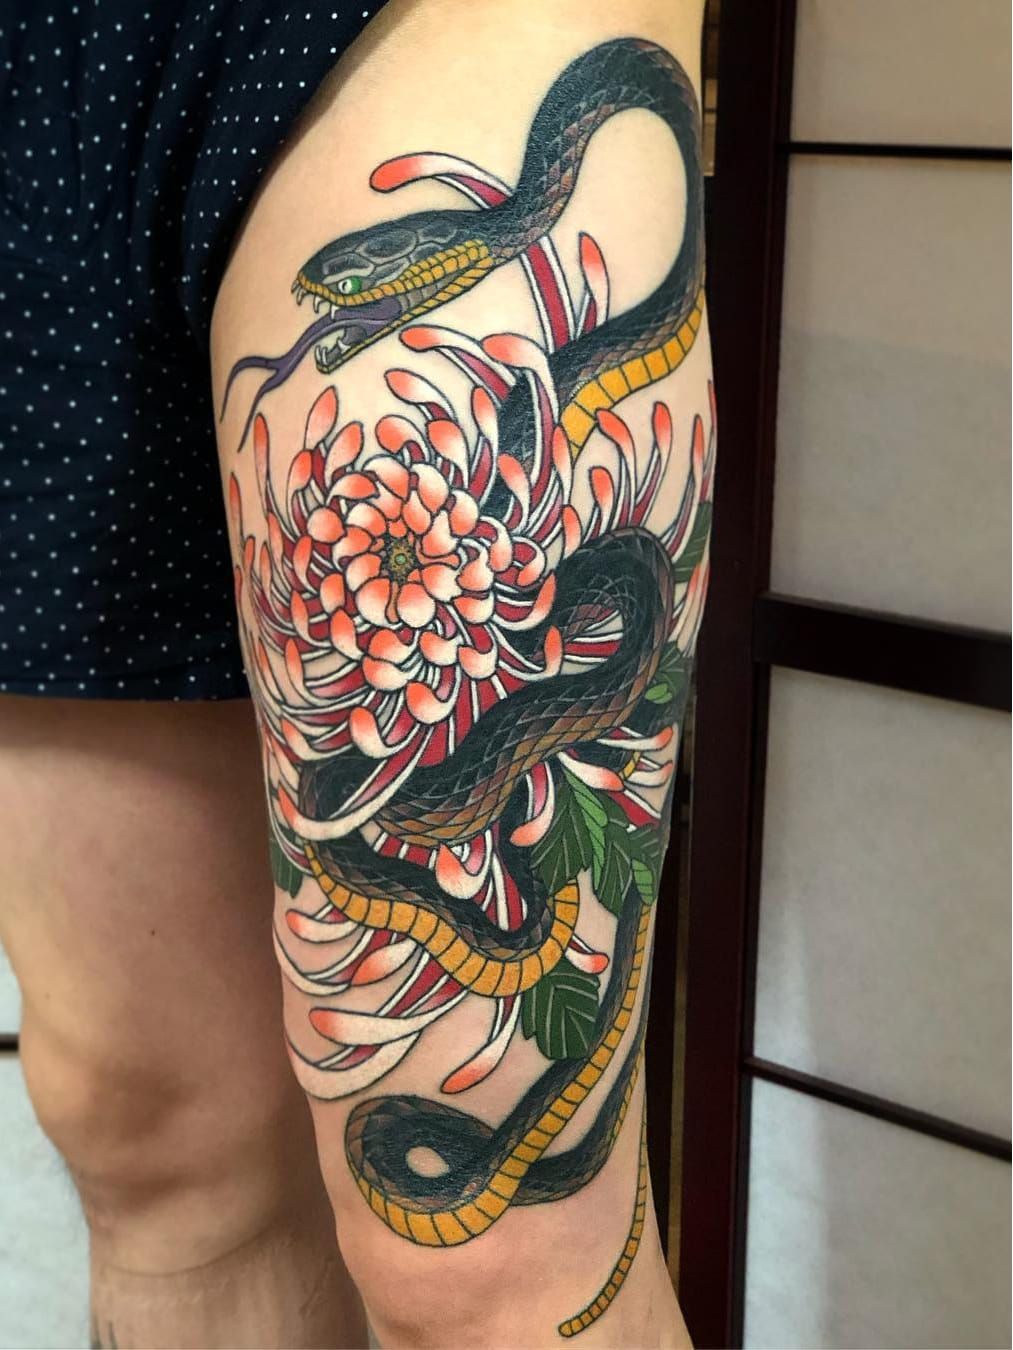 Tattoo uploaded by Stacie Mayer  Traditional Japanese half sleeve Chrysanthemum  tattoo by Nicolas Fox sleeve Japanese flower chrysanthemum NicolasFox   Tattoodo